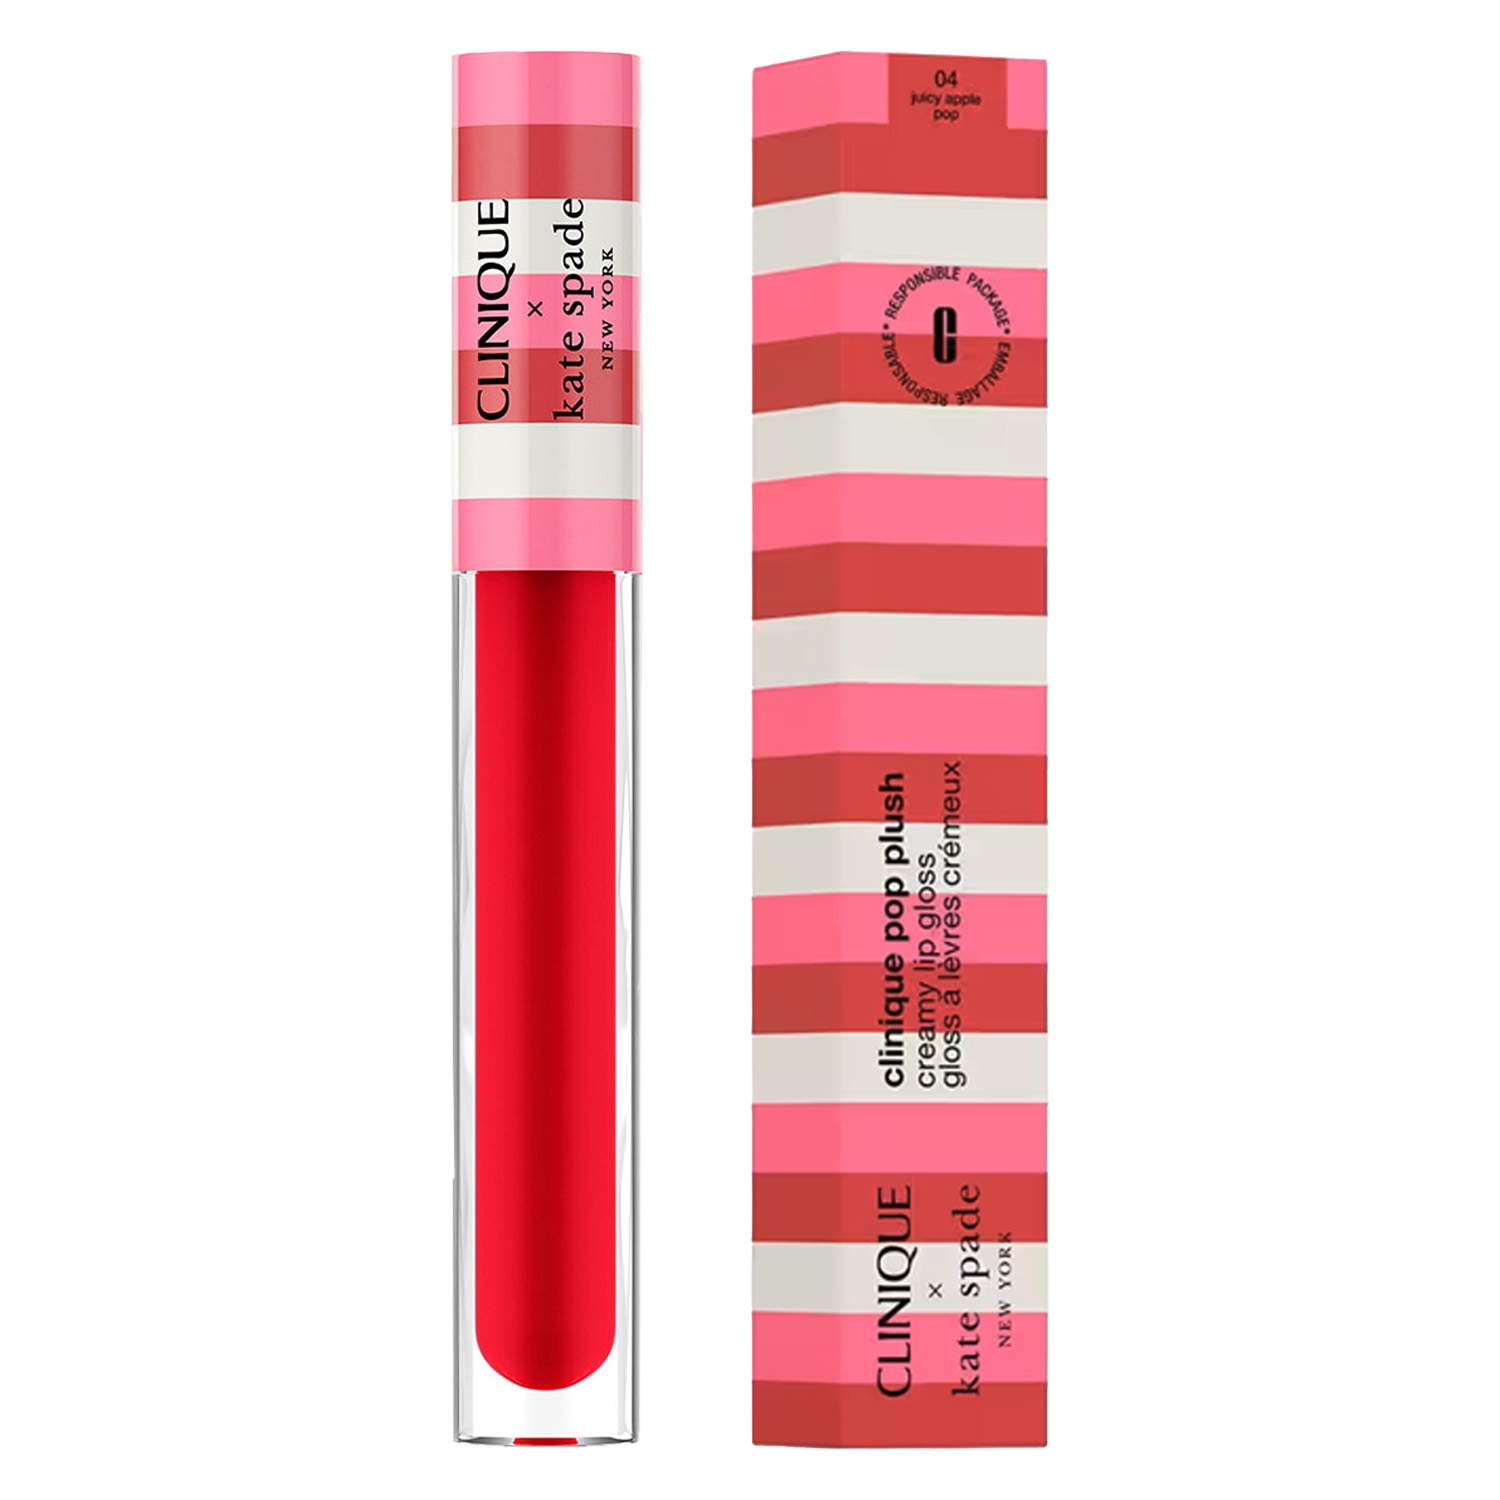 Produktbild von Clinique Lips - Decorated Kate Spade Pop Plush 04 Juicy Apple Pop